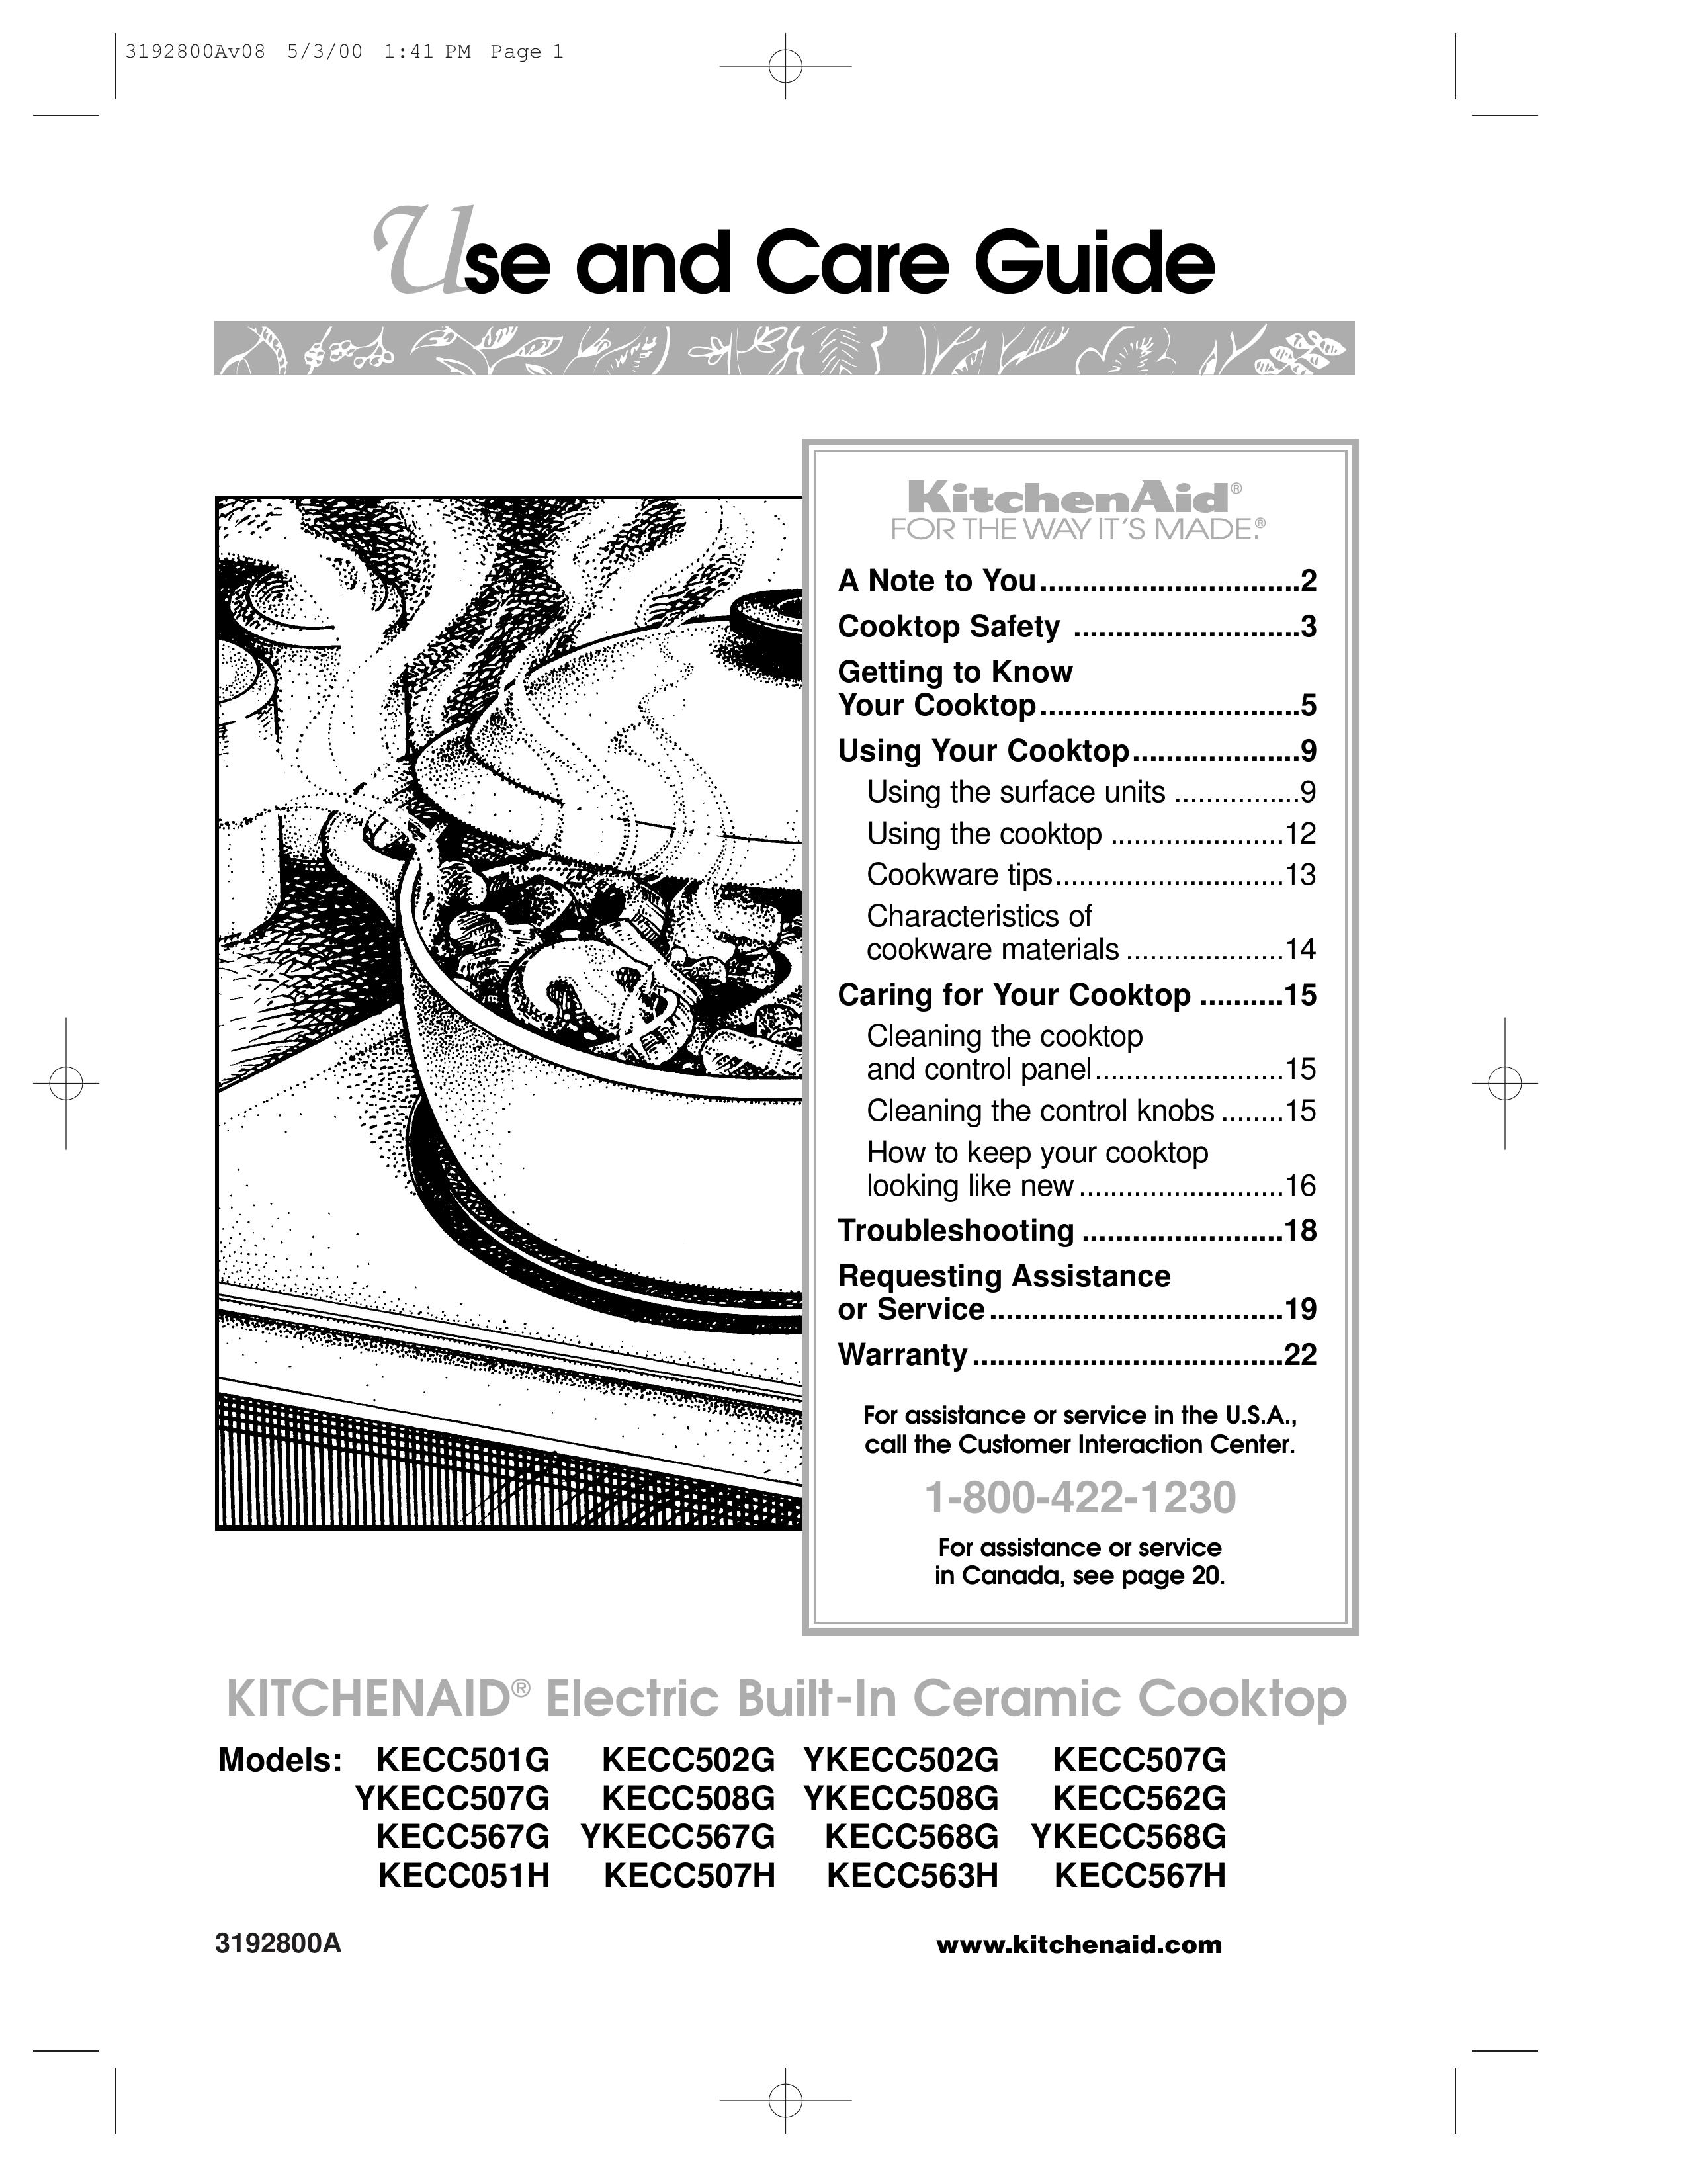 KitchenAid YKECC568G Music Pedal User Manual